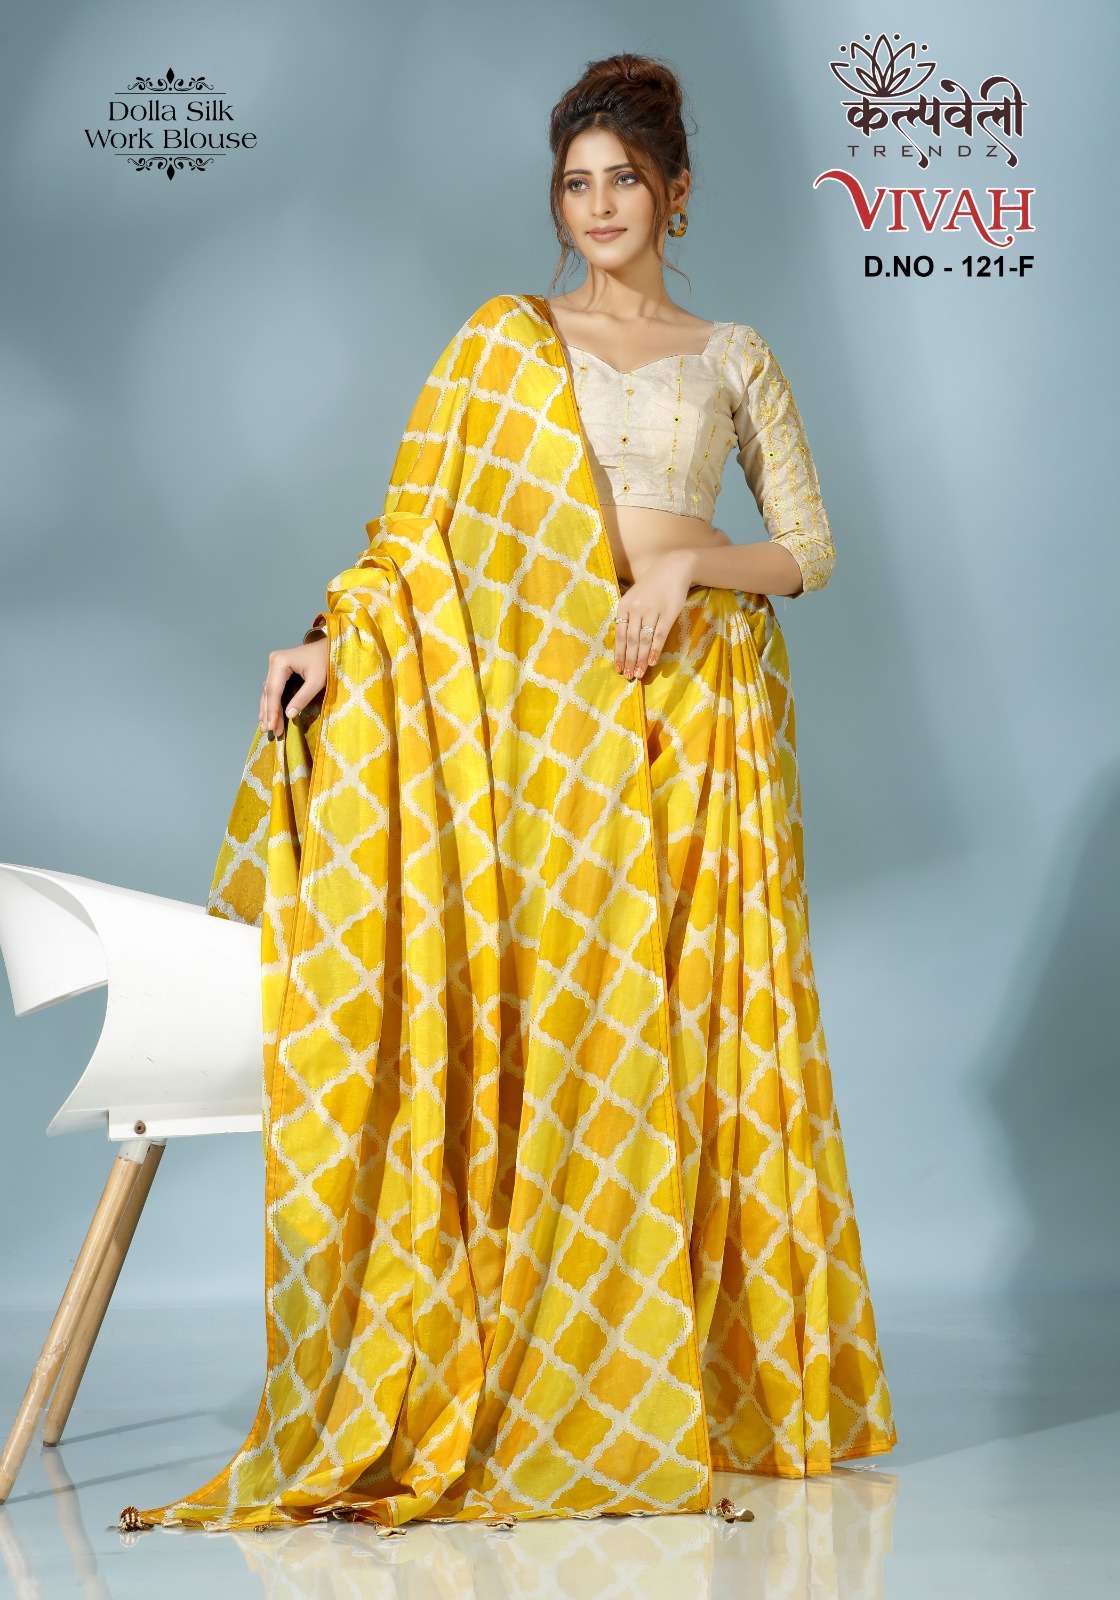 kalpavelly trendz vivah 121 fancy casual sarees